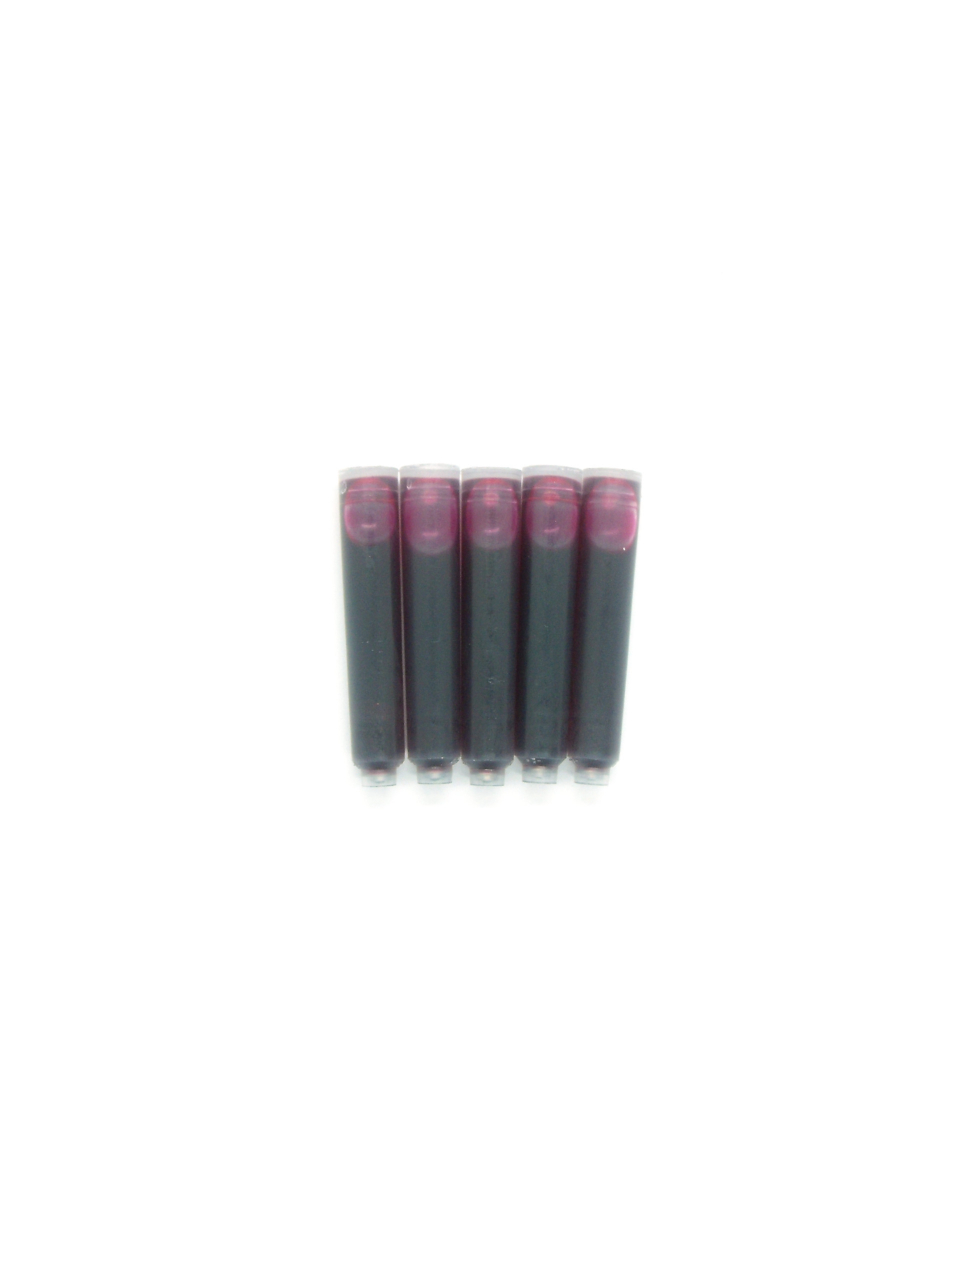 PenConverter Ink Cartridges For Panache Fountain Pens (Pink)